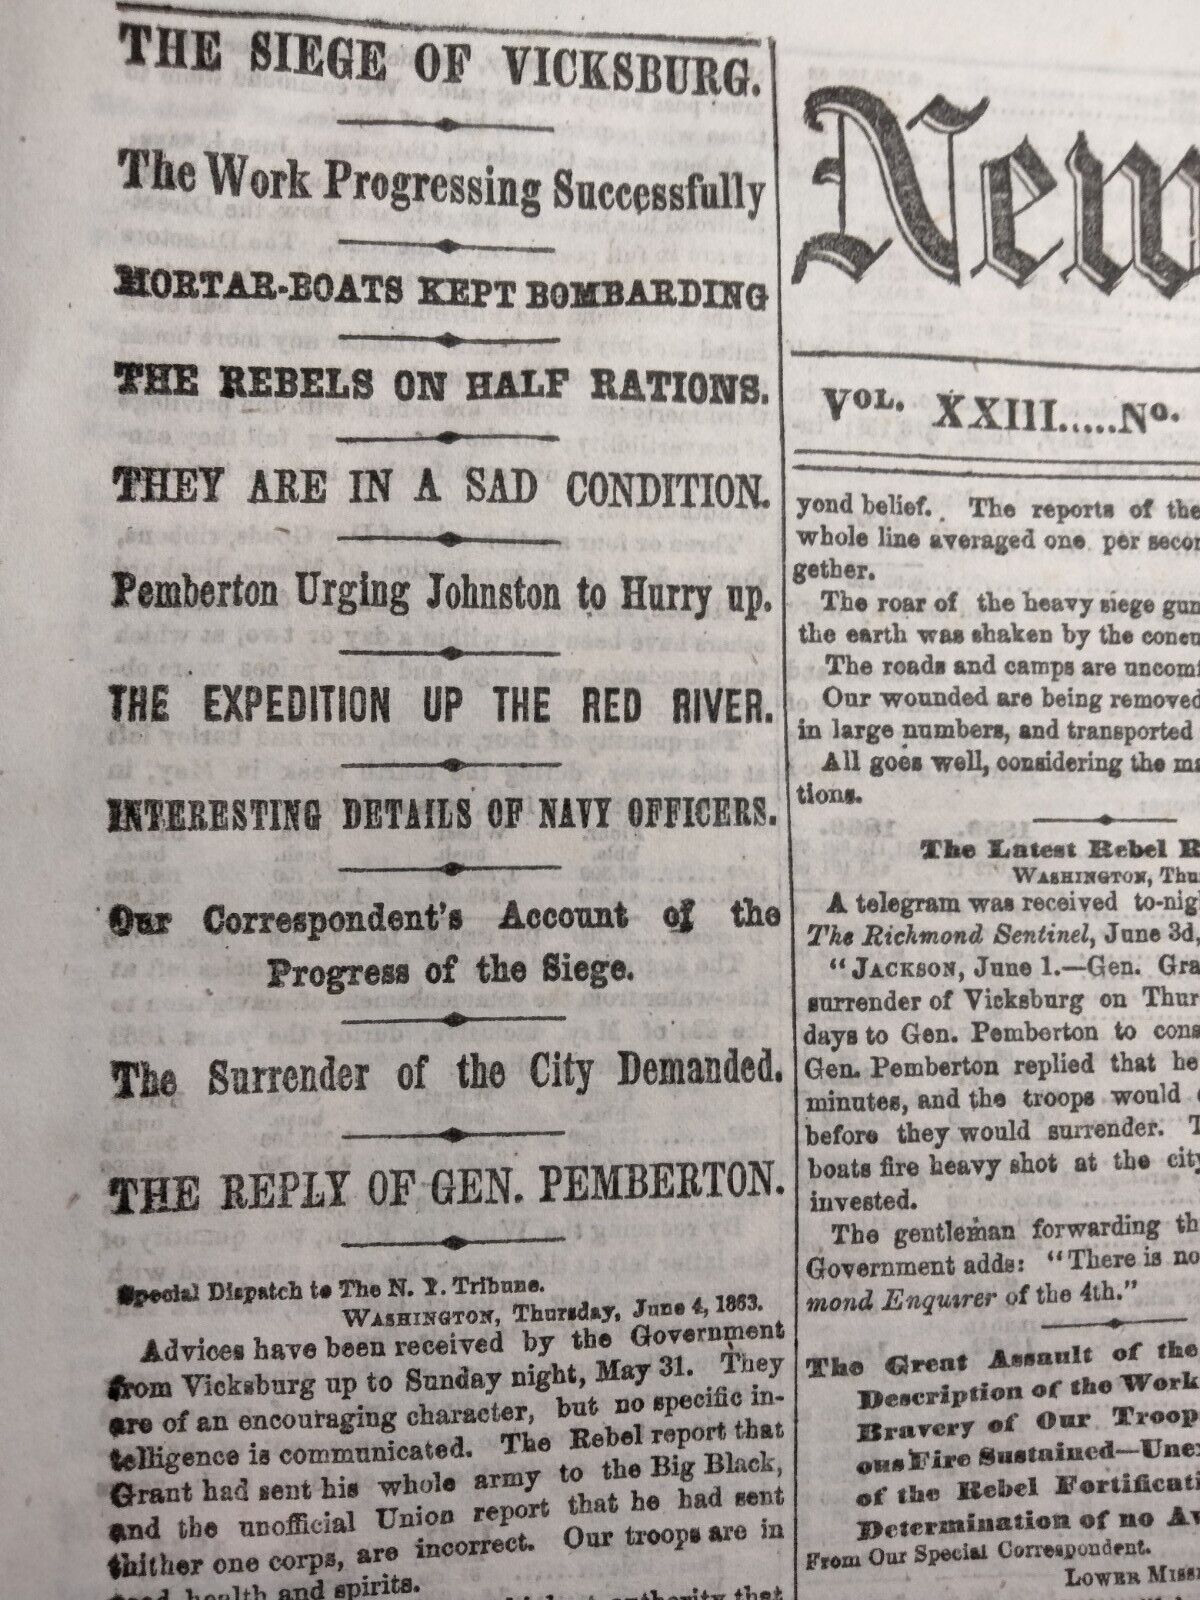 Civil War Newspapers-  THE SIEGE OF VICKSBURG:  SURRENDER OF THE CITY DEMANDED